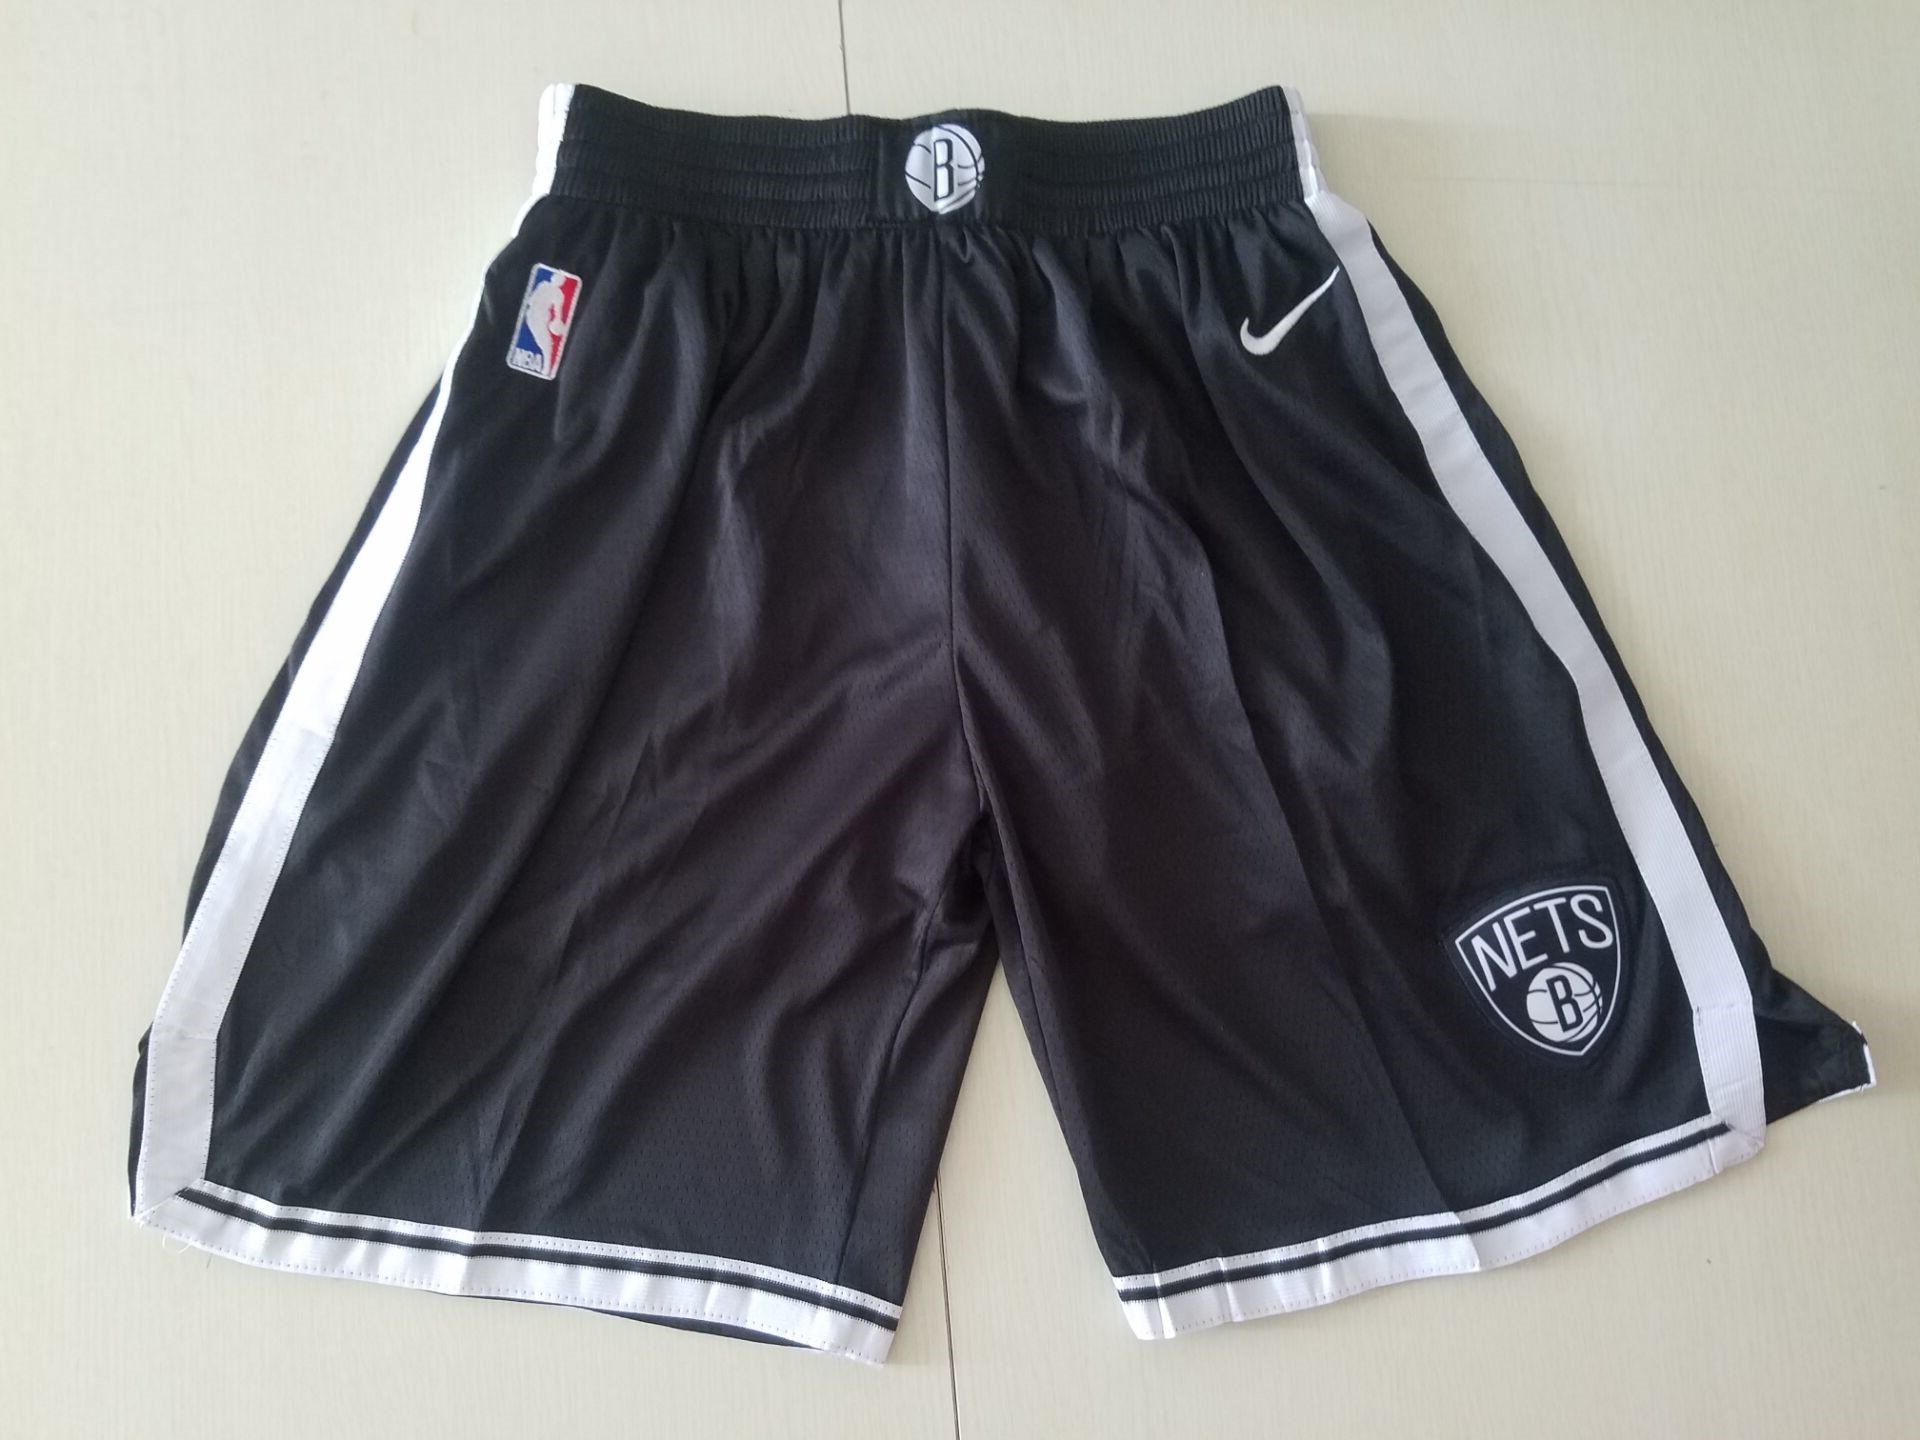 Youth NBA Nike Brooklyn Nets white shorts style2